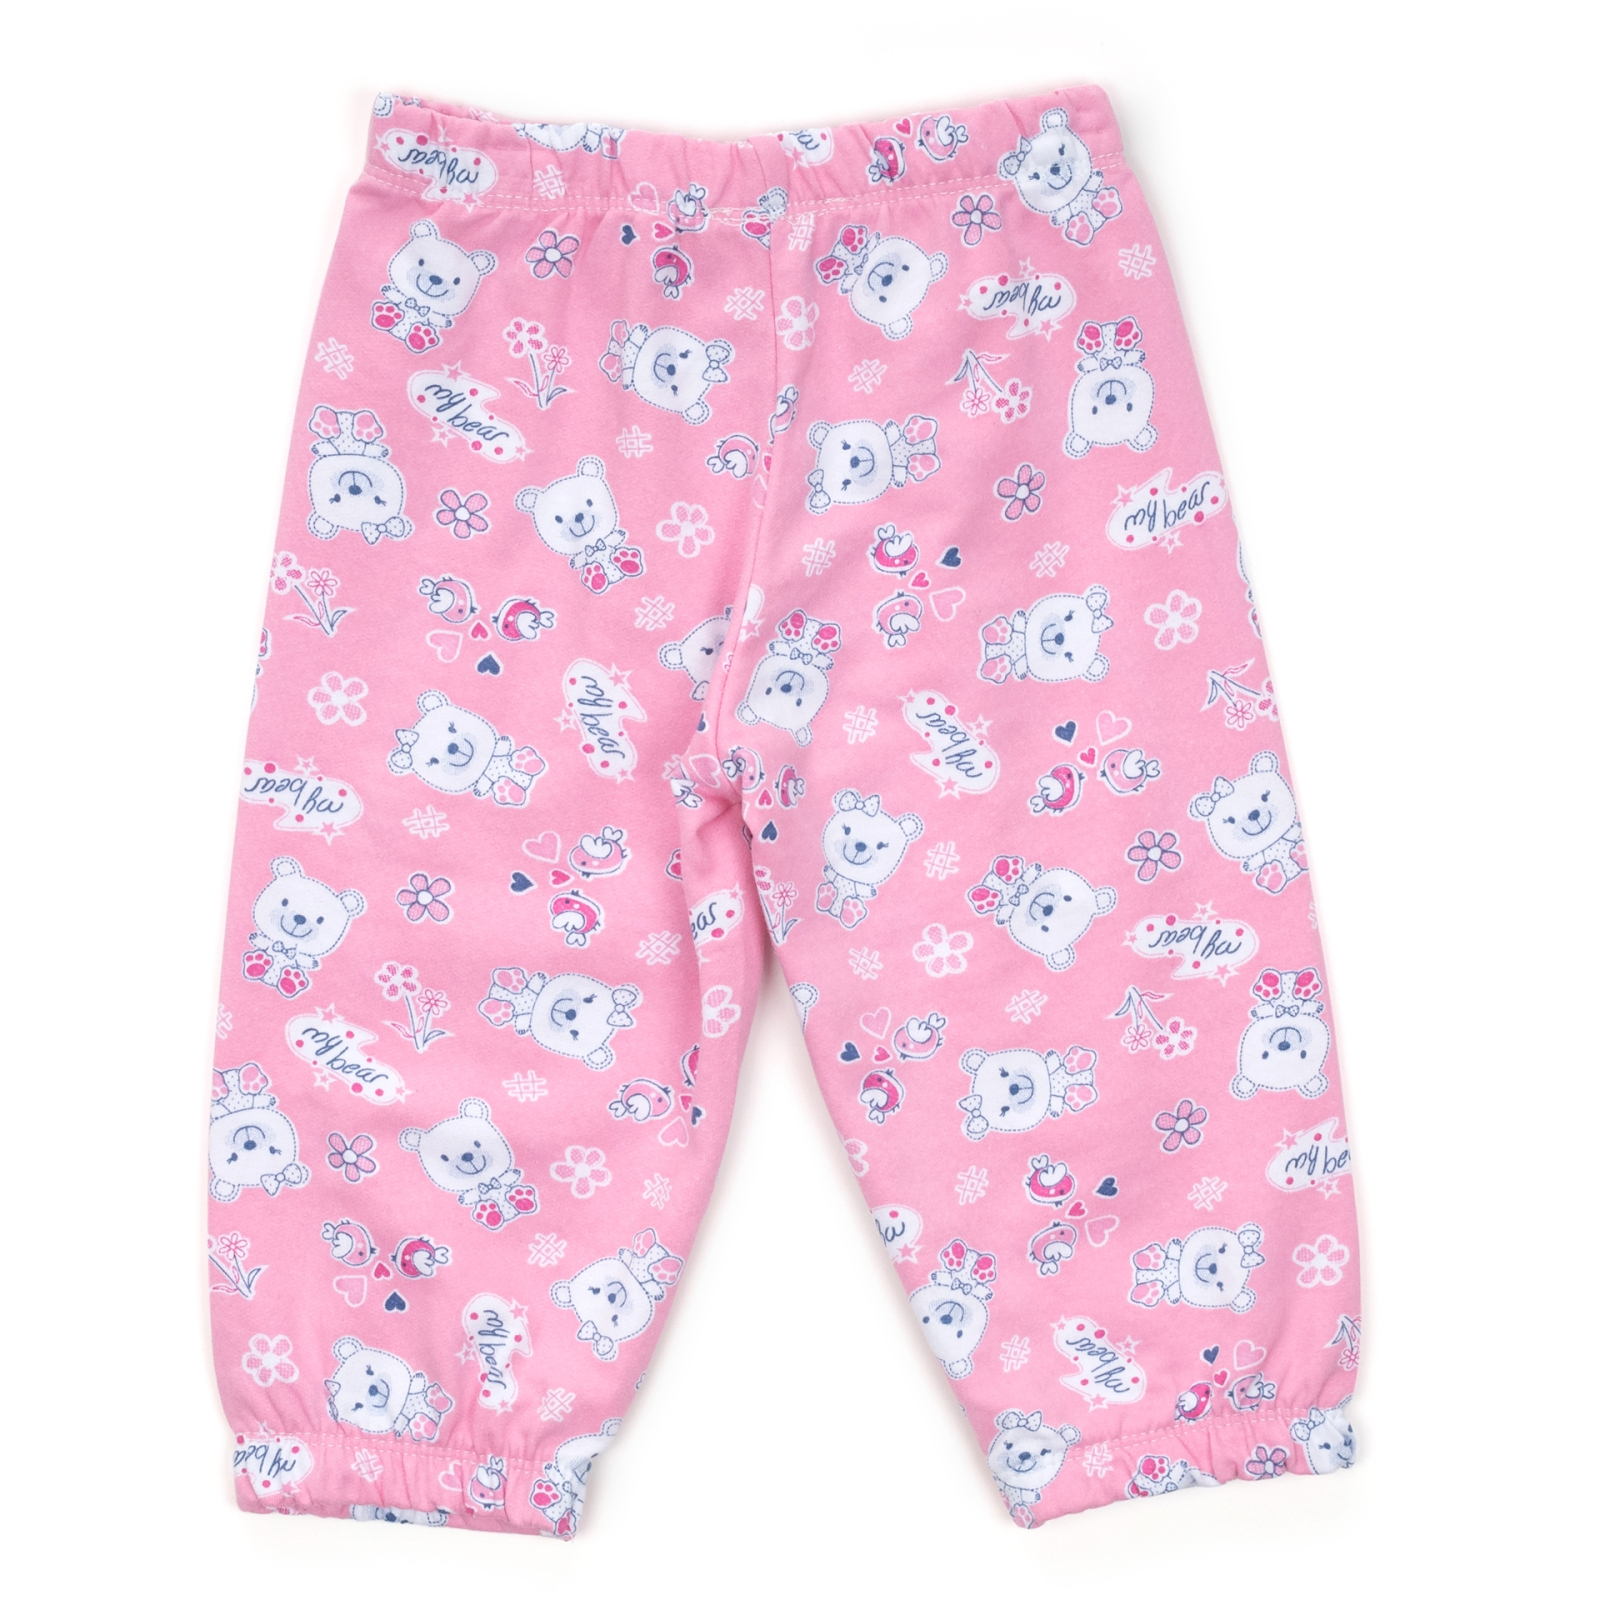 Пижама Breeze с мишками (8382-80G-pink) изображение 6